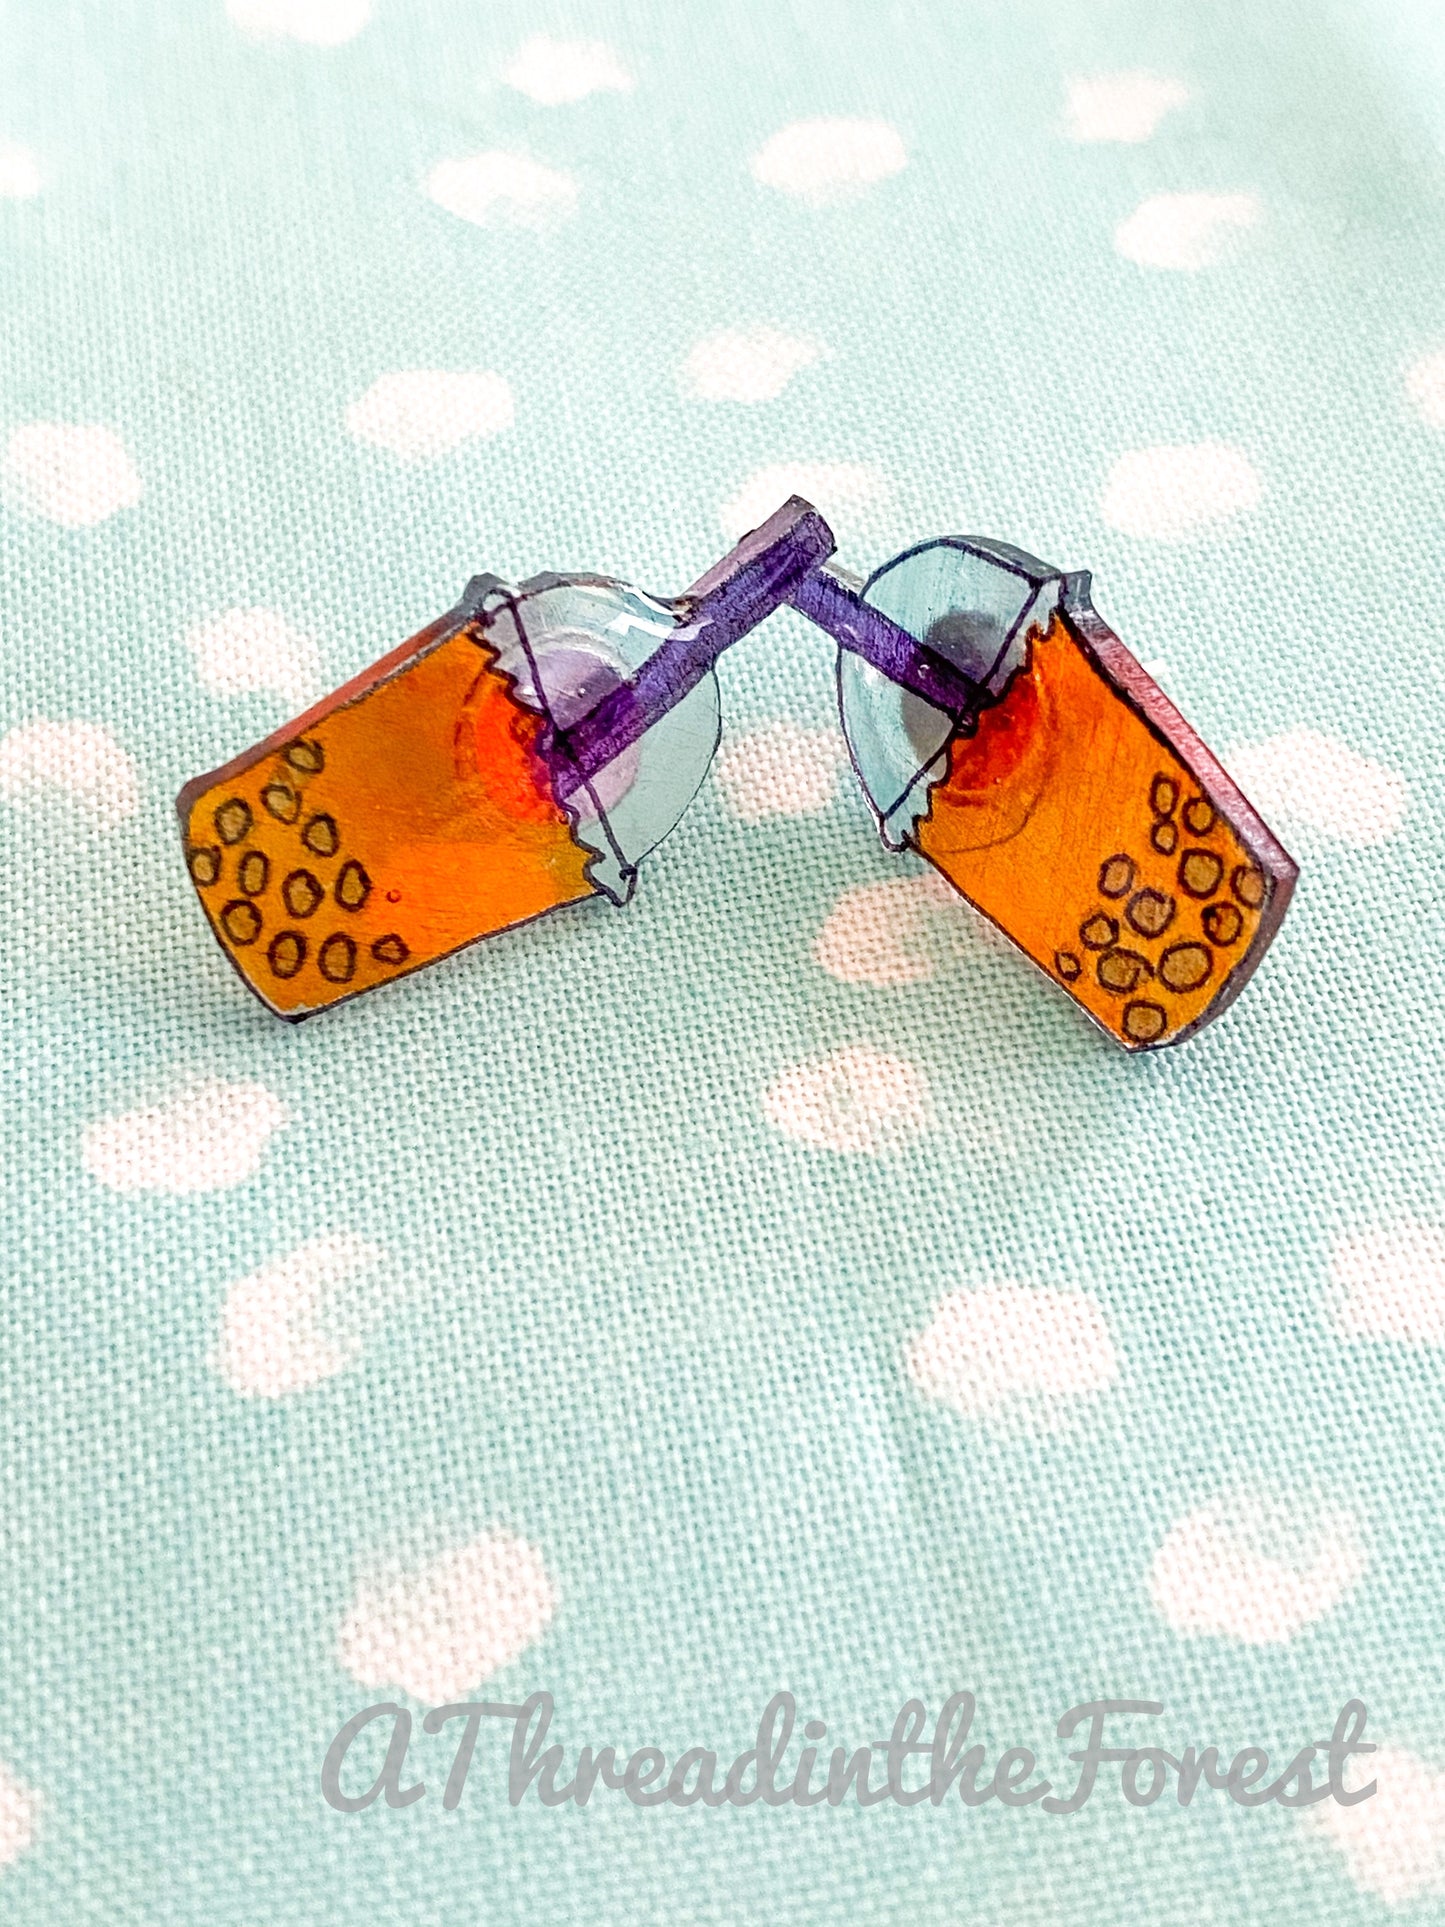 Boba Tea Earrings - Handmade Color Pop Earring Pair